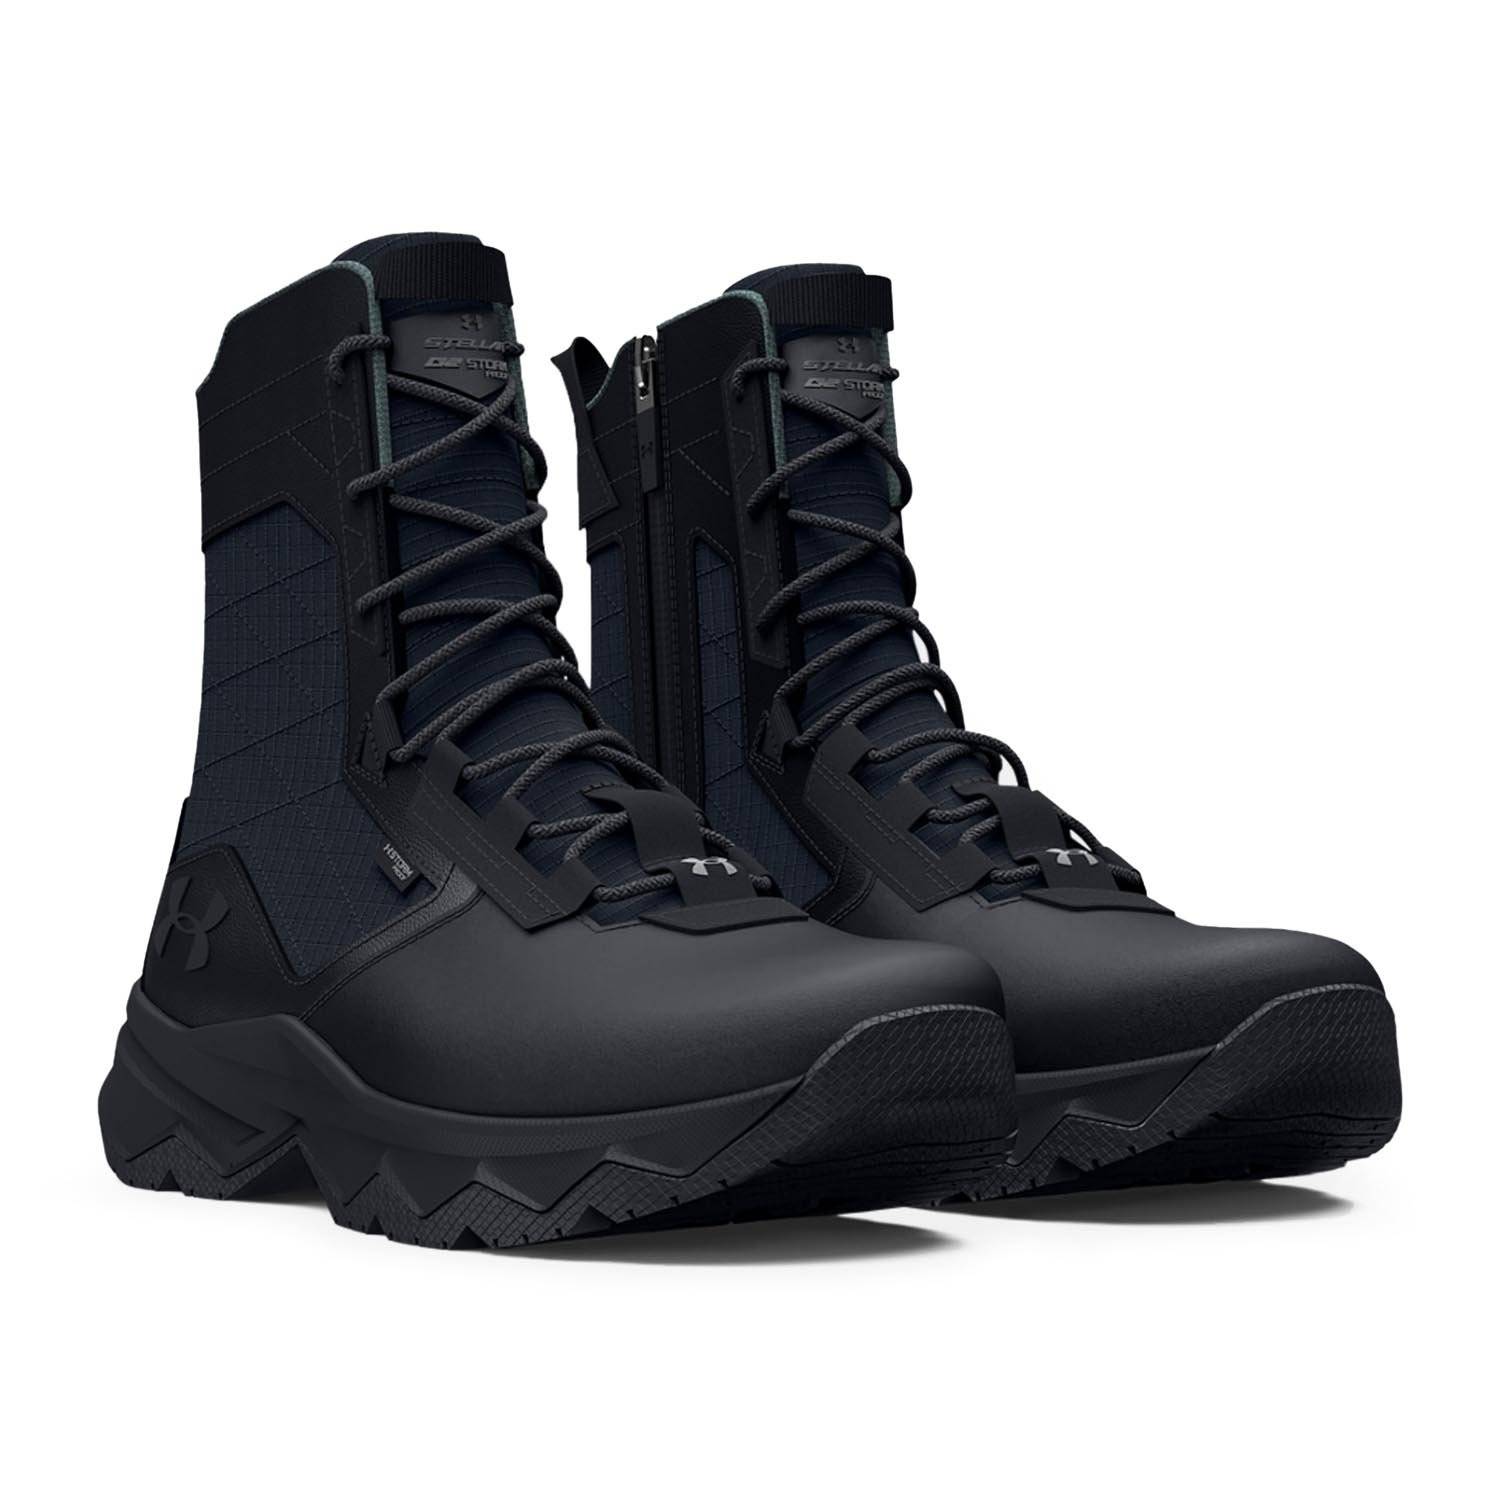 Under Armour Mens UA 8 Stellar Side Zip Tactical Boot, Black 